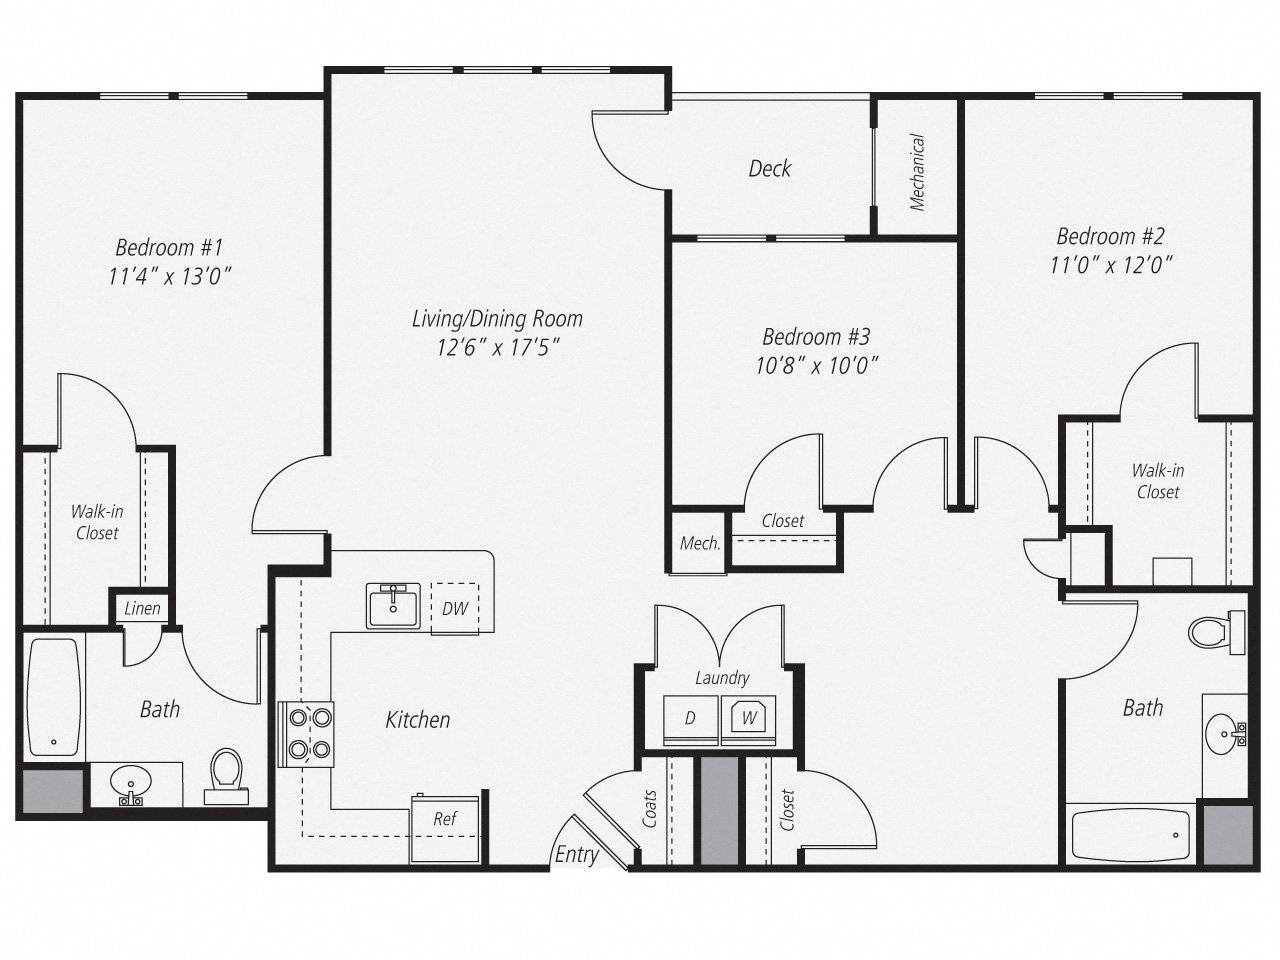 Floorplan for Apartment #314, 3 bedroom unit at Halstead Norwalk